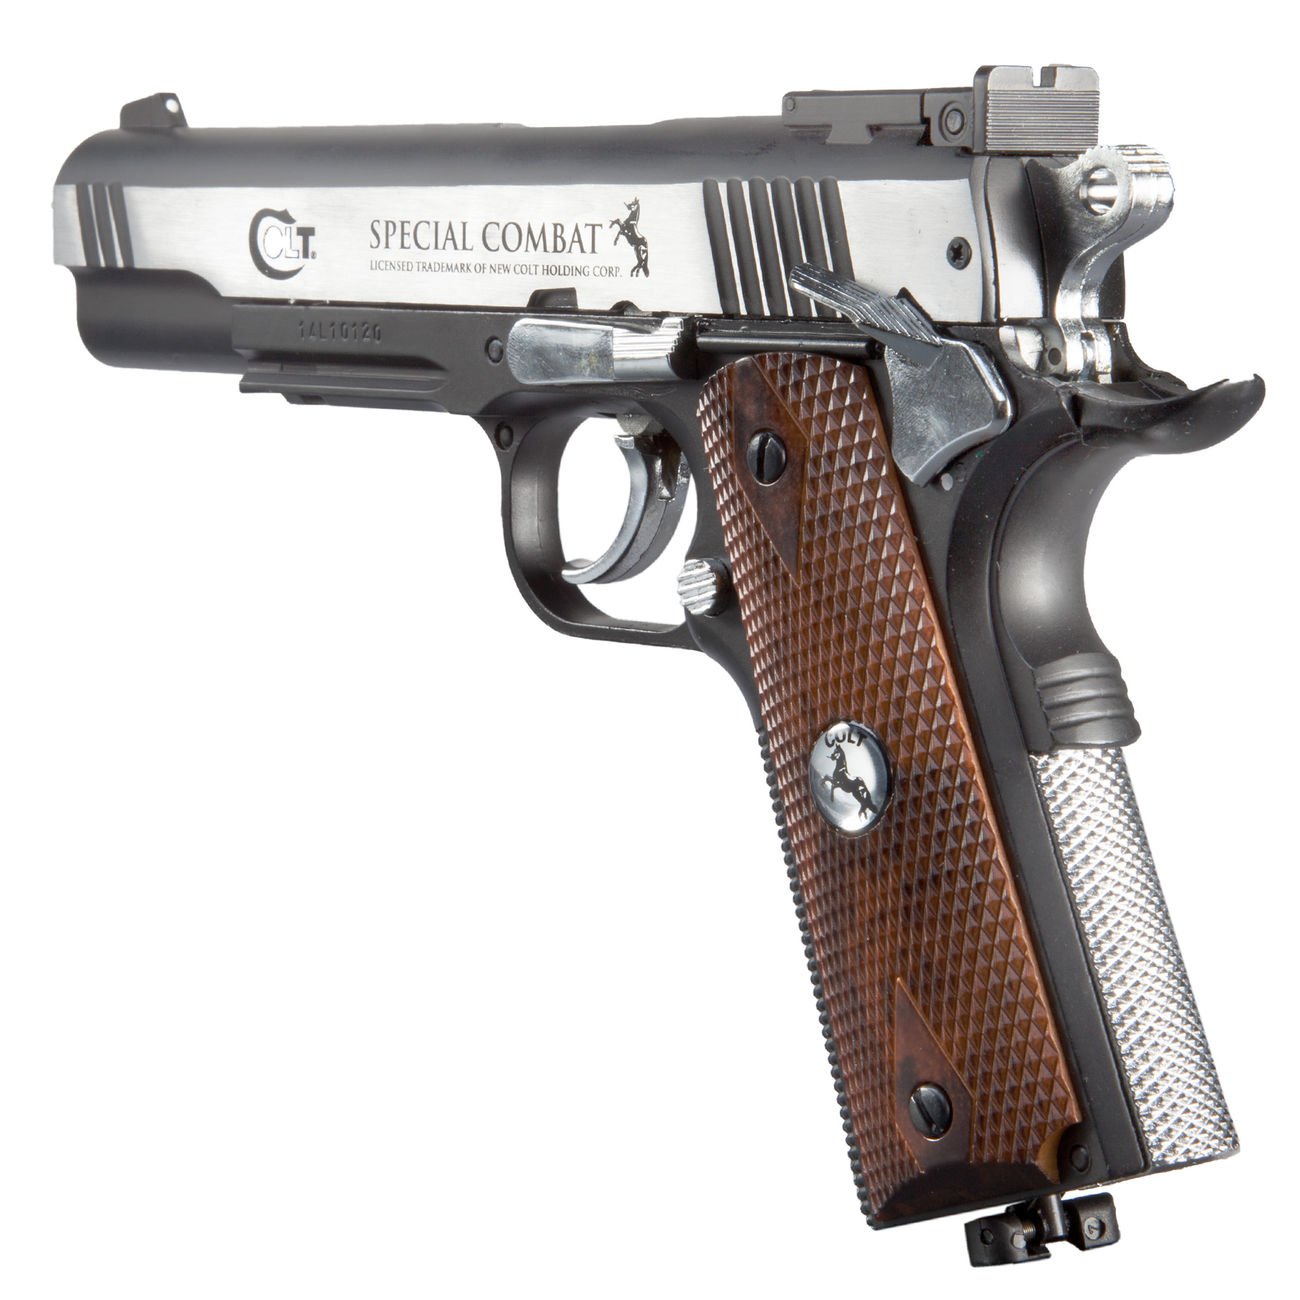 Blisterkarte Patronen Colt Spiel Special Action 206mm GSG 9 12-Schuss Pistole 